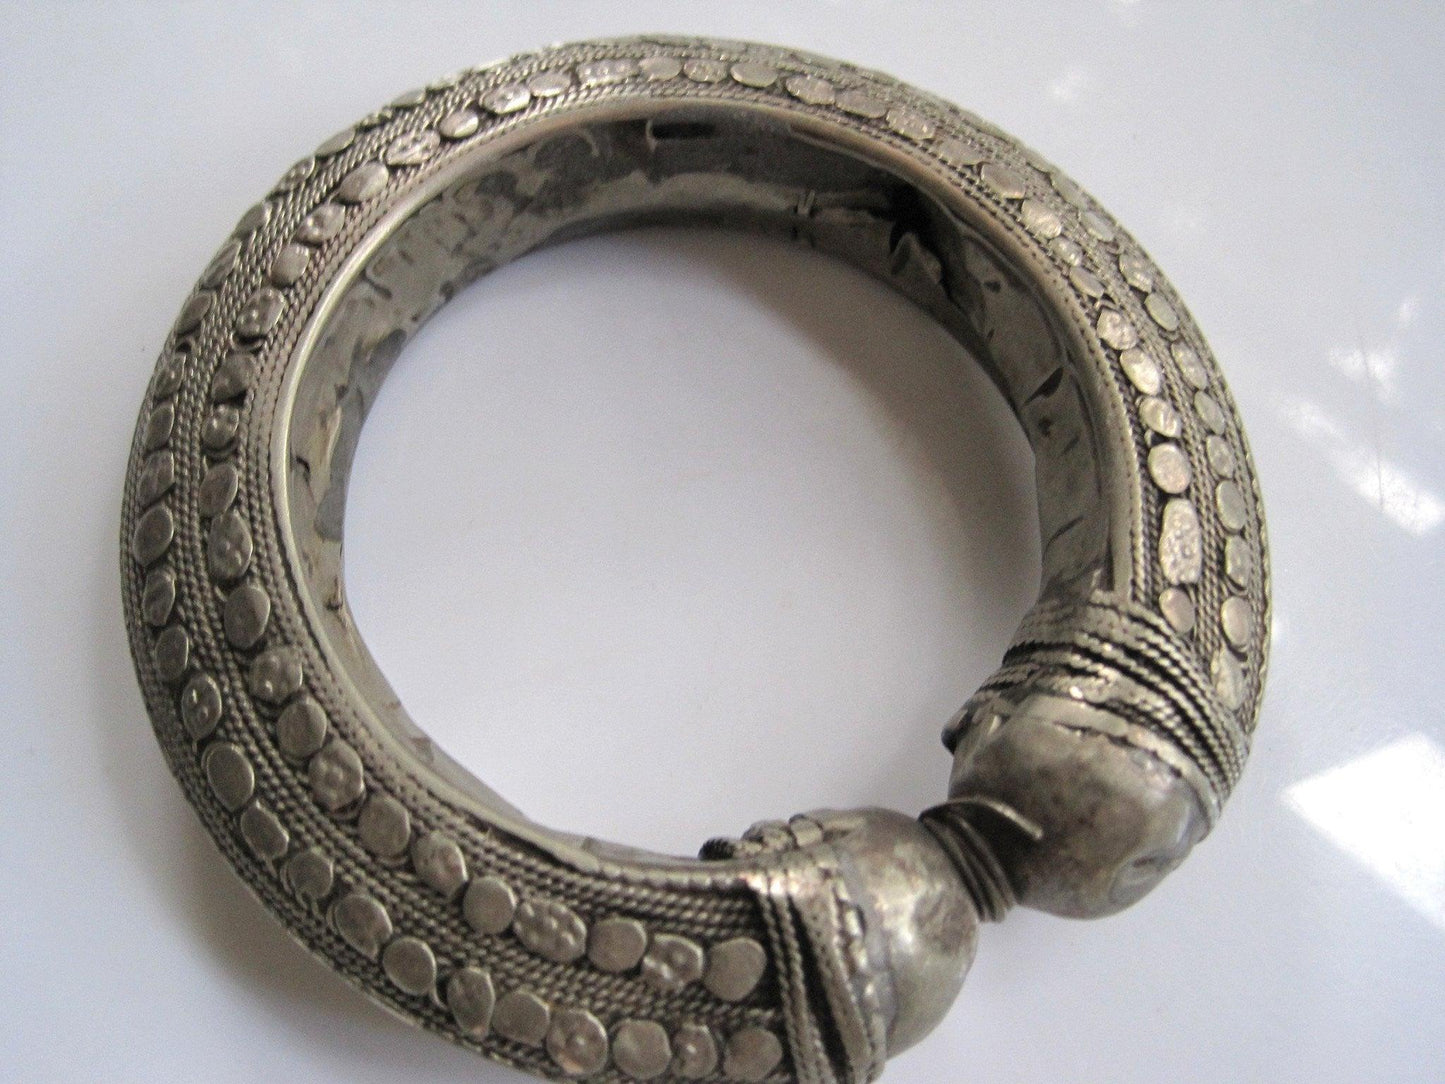 Vintage Metal Bedouin Bracelet or Bangle from Yemen - Anteeka